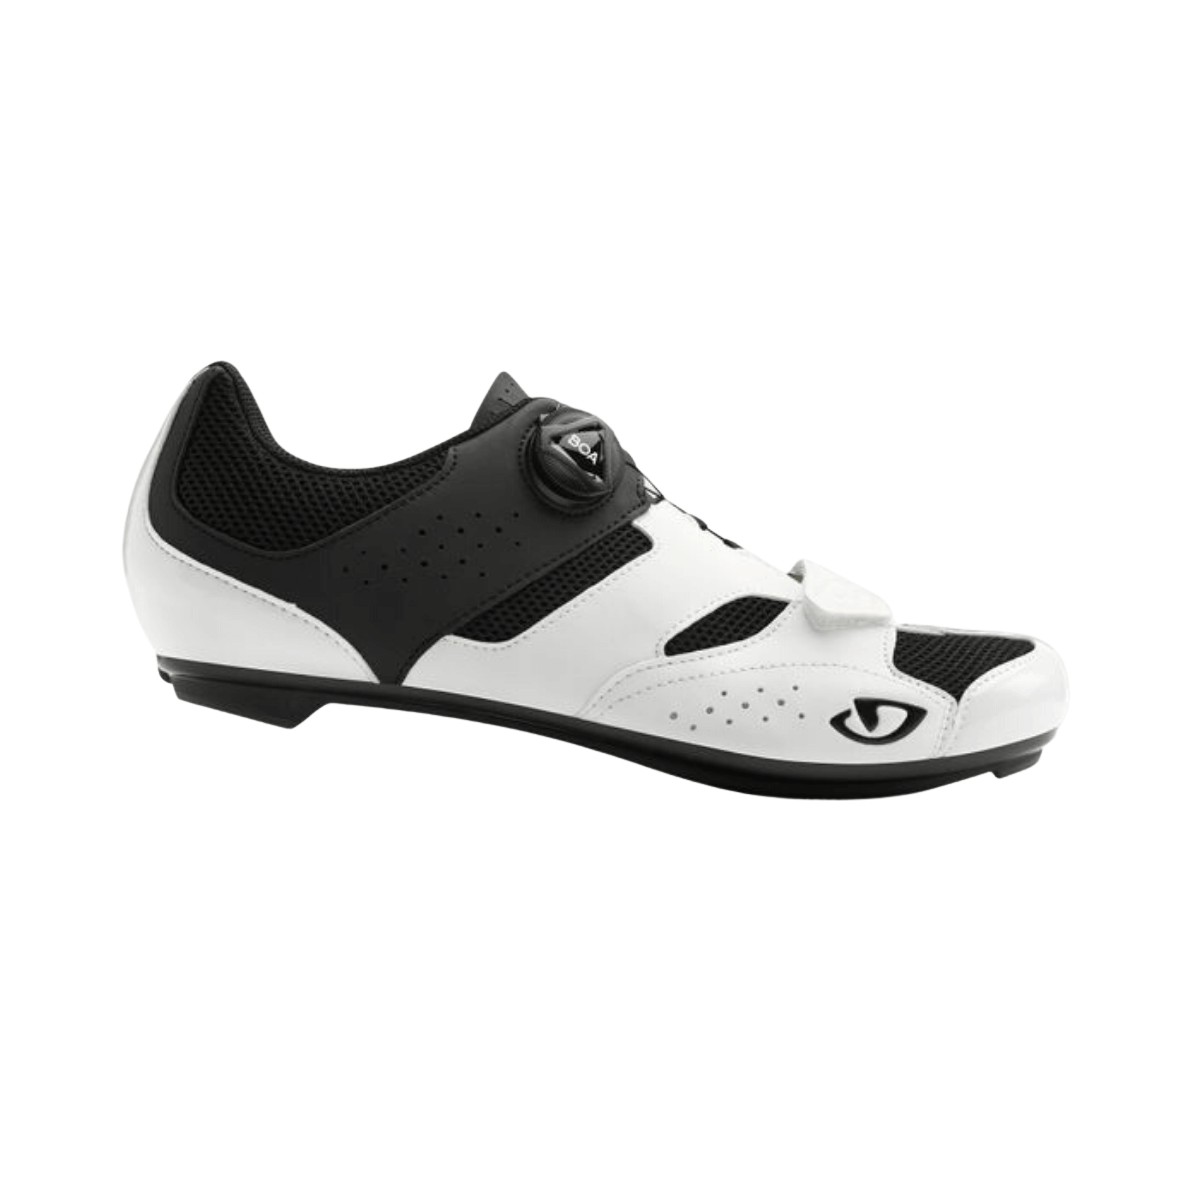 Chaussures Giro Savix Blanc Noir, Taille 41 - EUR